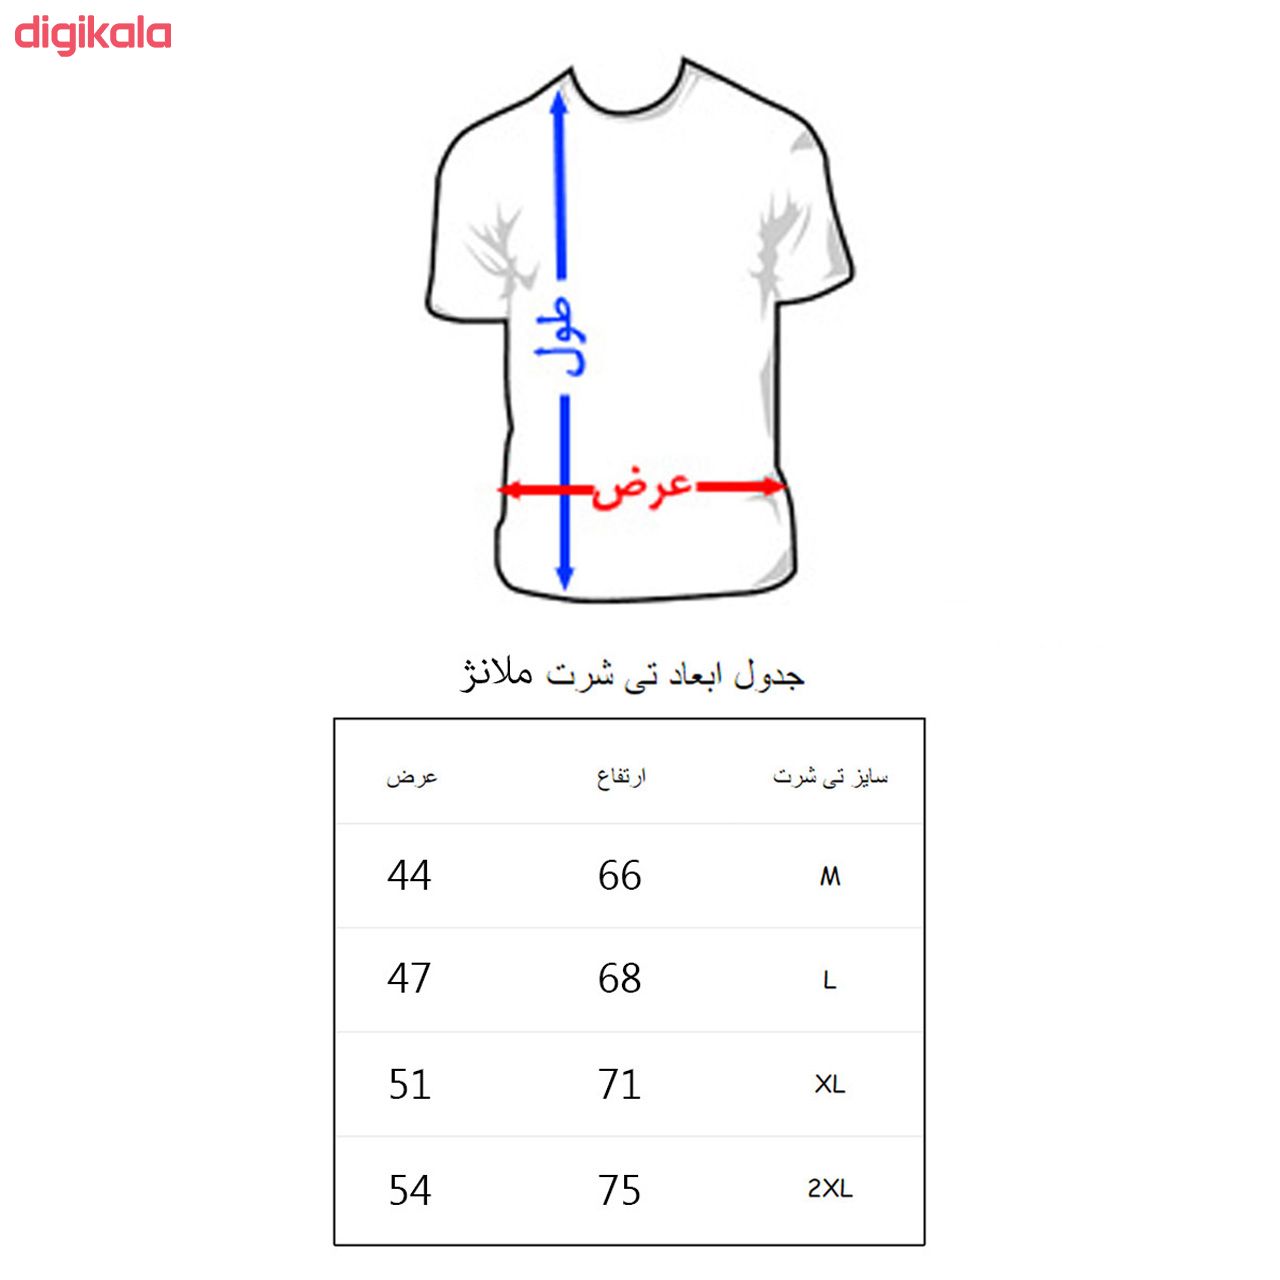 تی شرت مردانه به رسم طرح لِون کد 2273